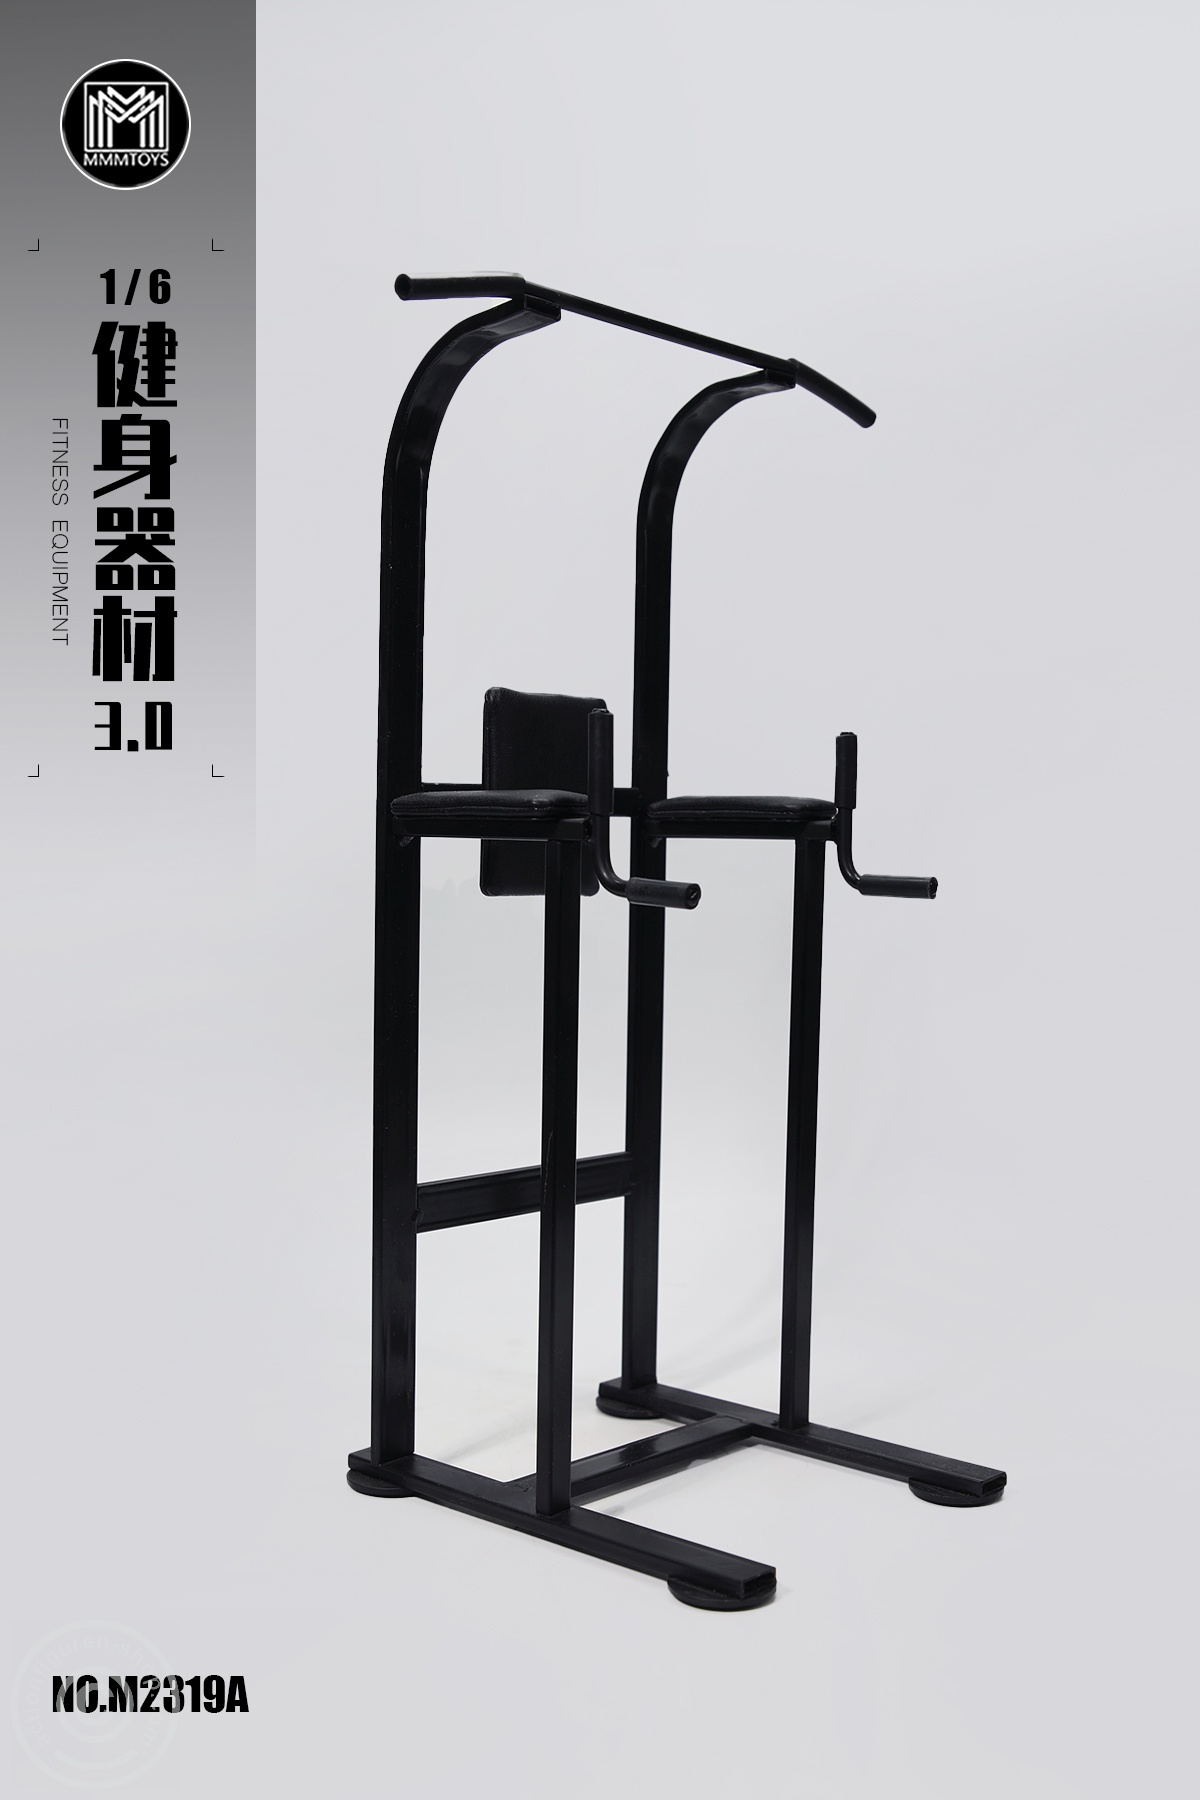 Fitness Equipment 3.0 - Set A